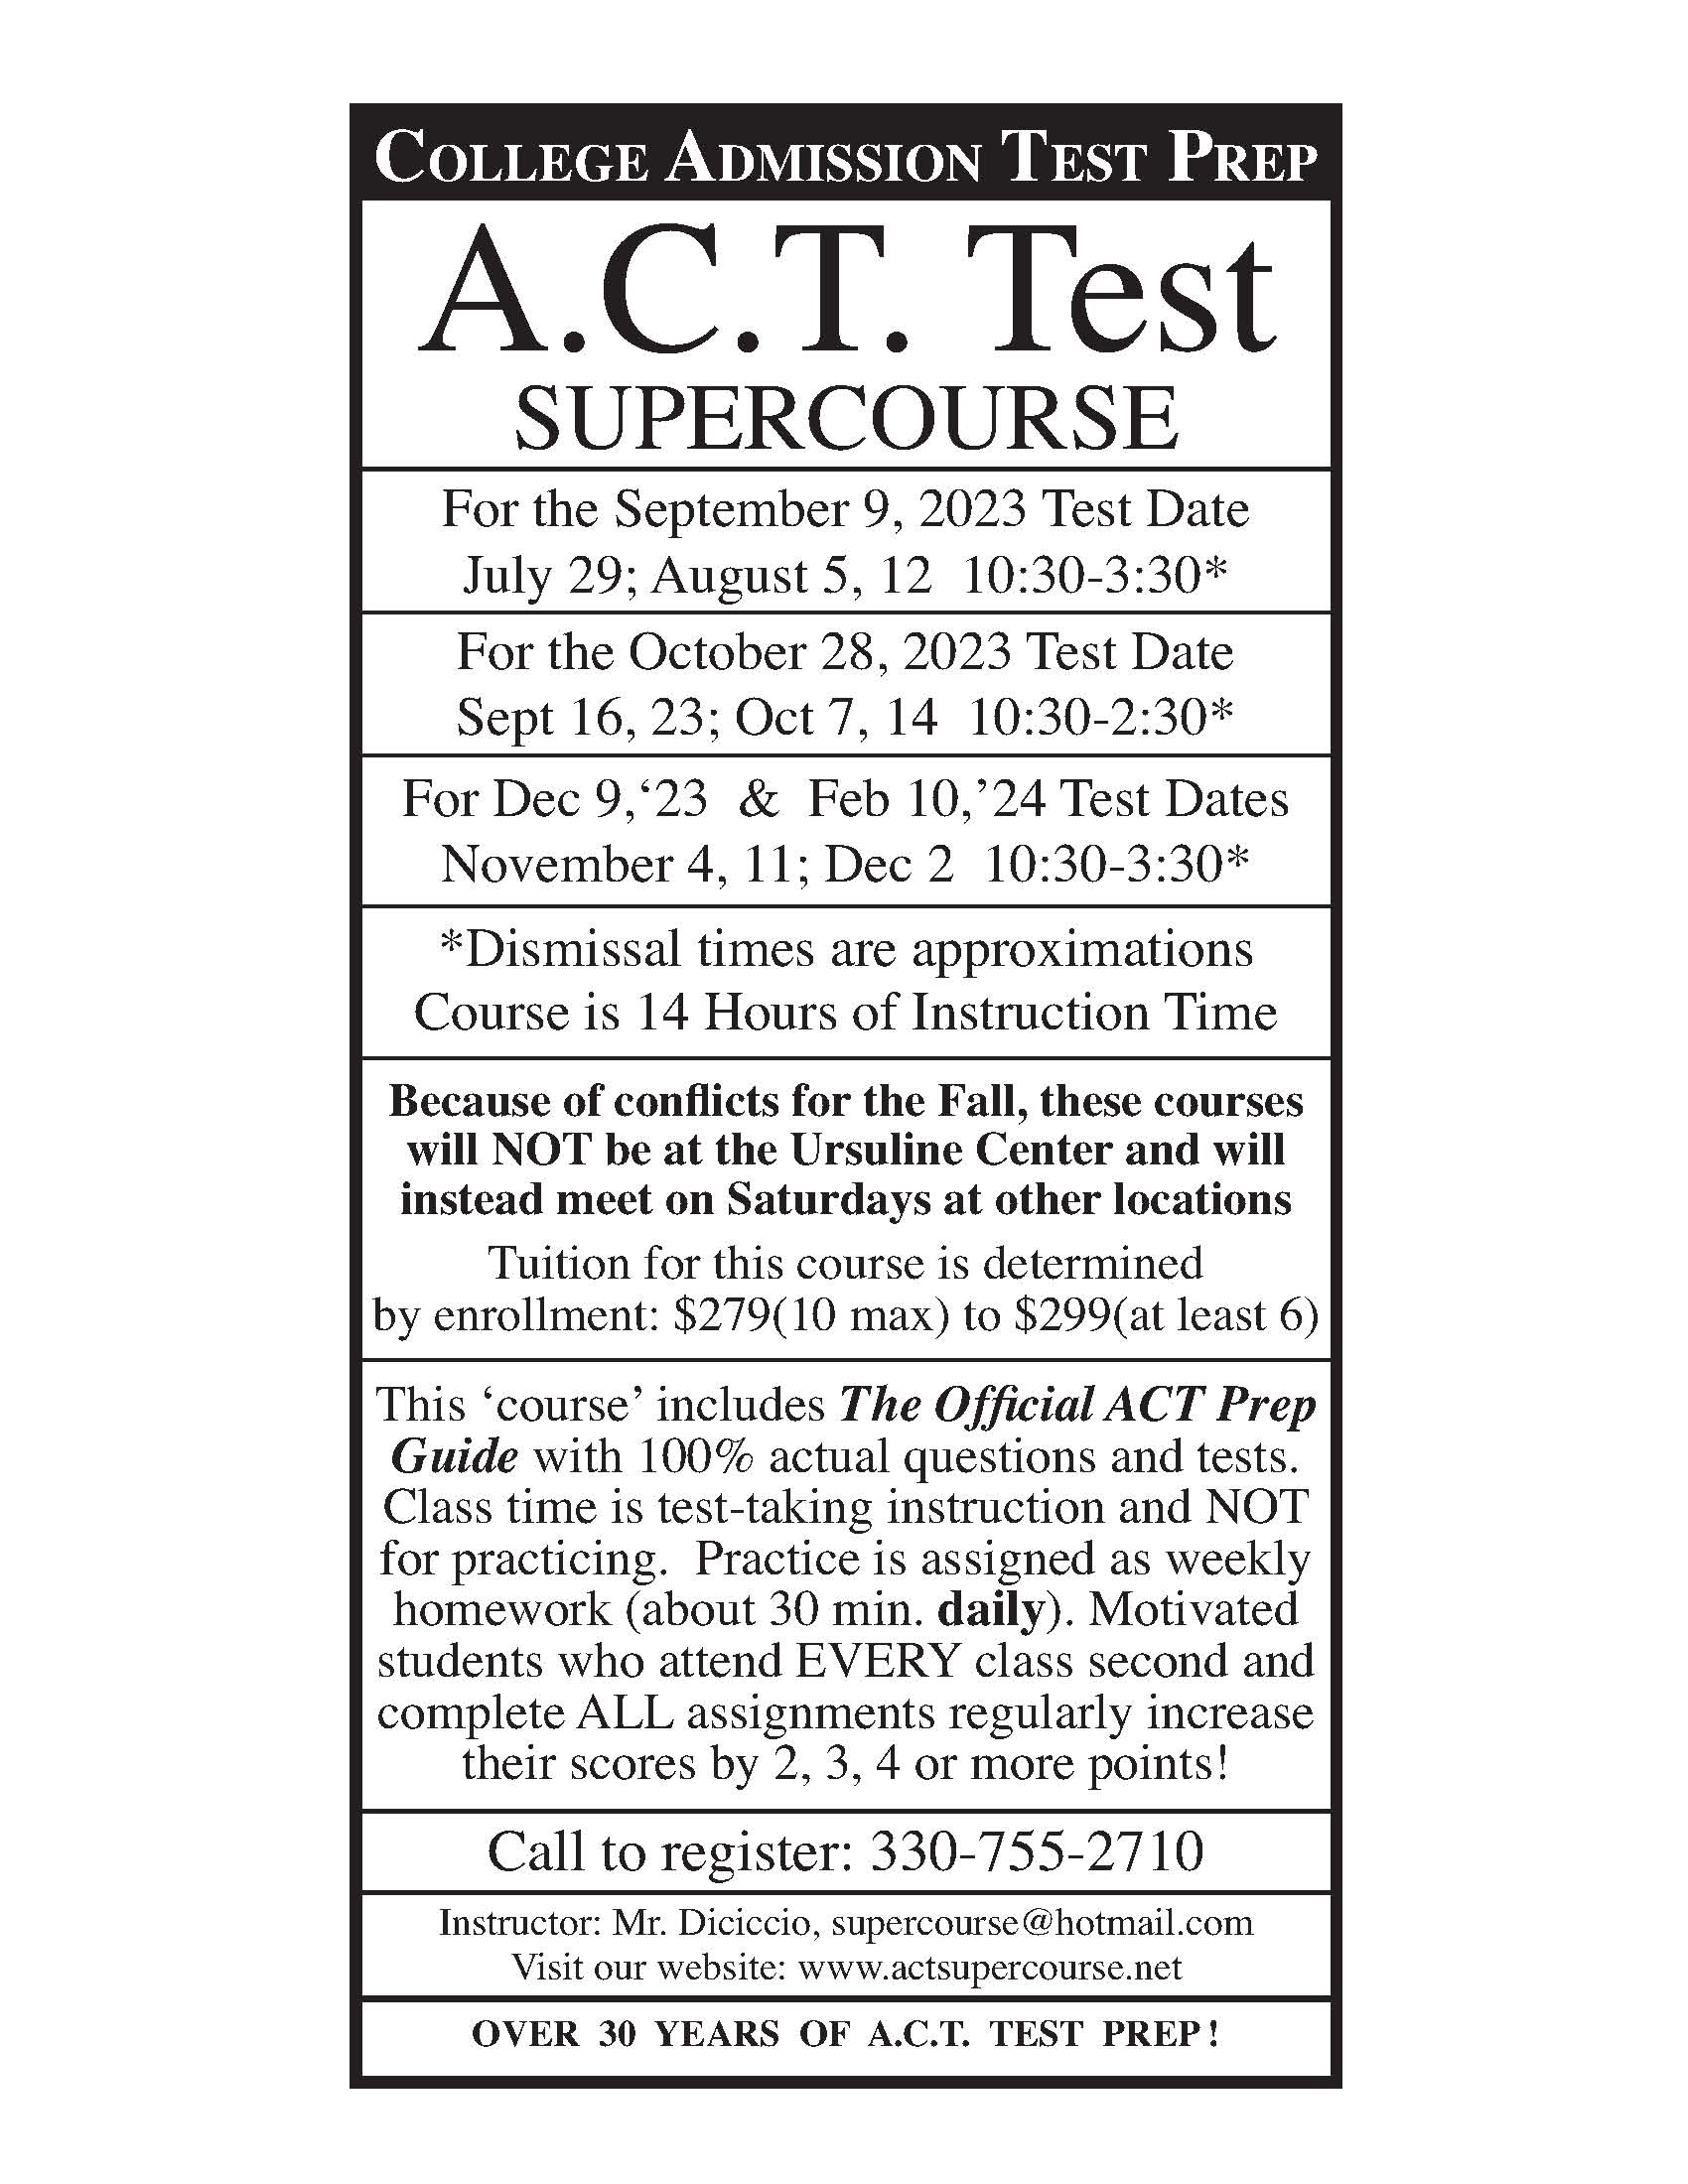 ACT Test prep